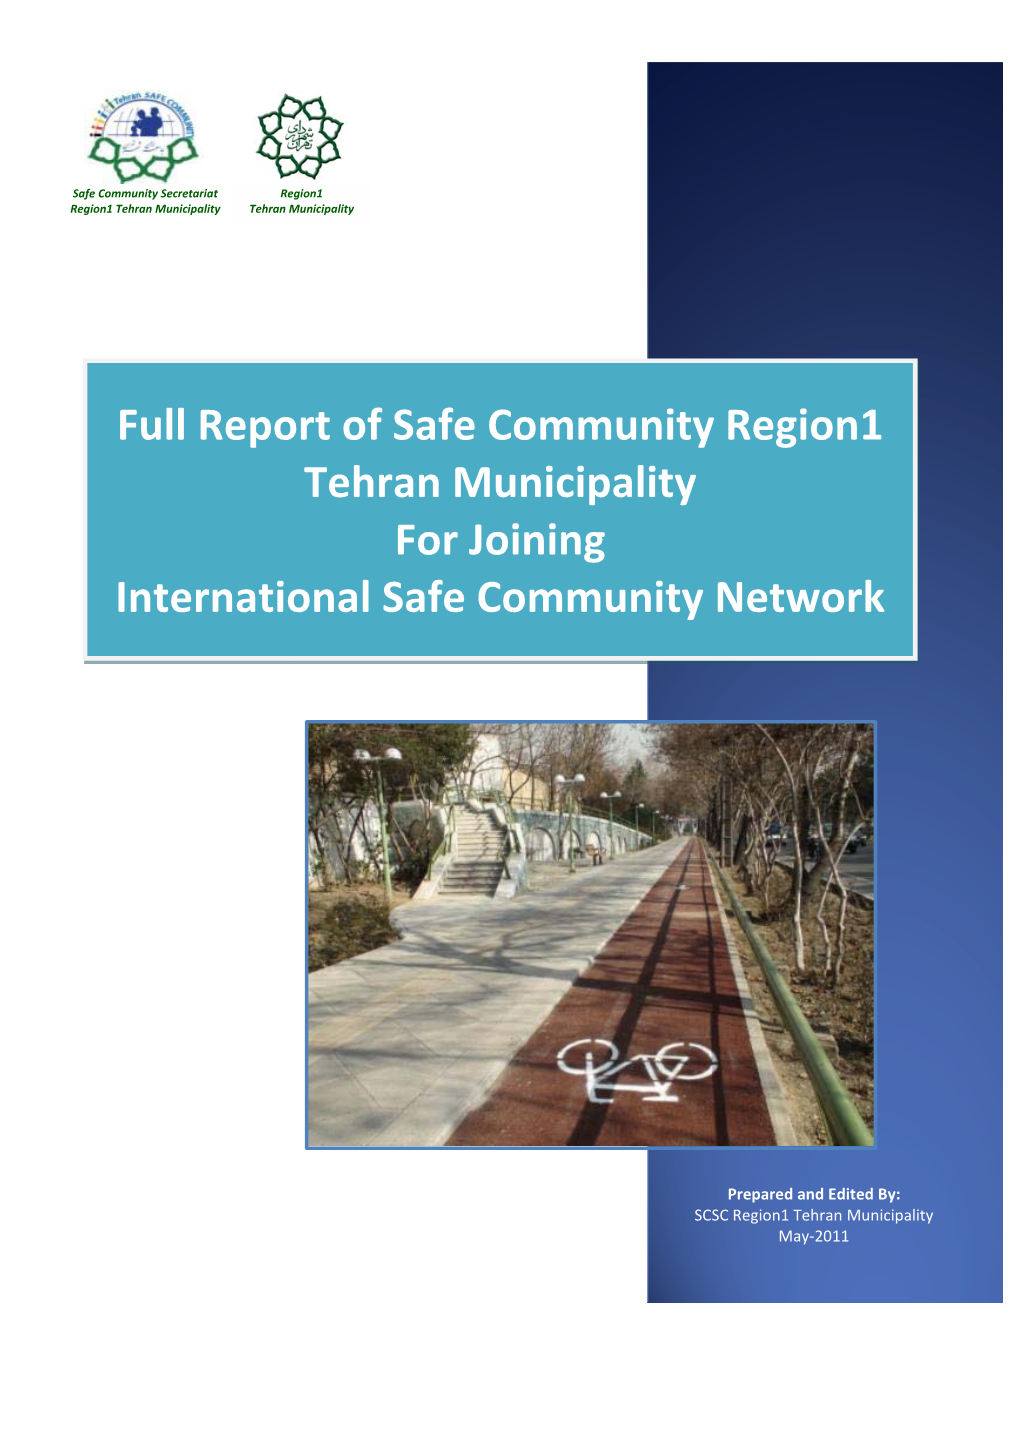 Full Report of Safe Community Region1 Tehran Municipality for Joining International Safe Community Network